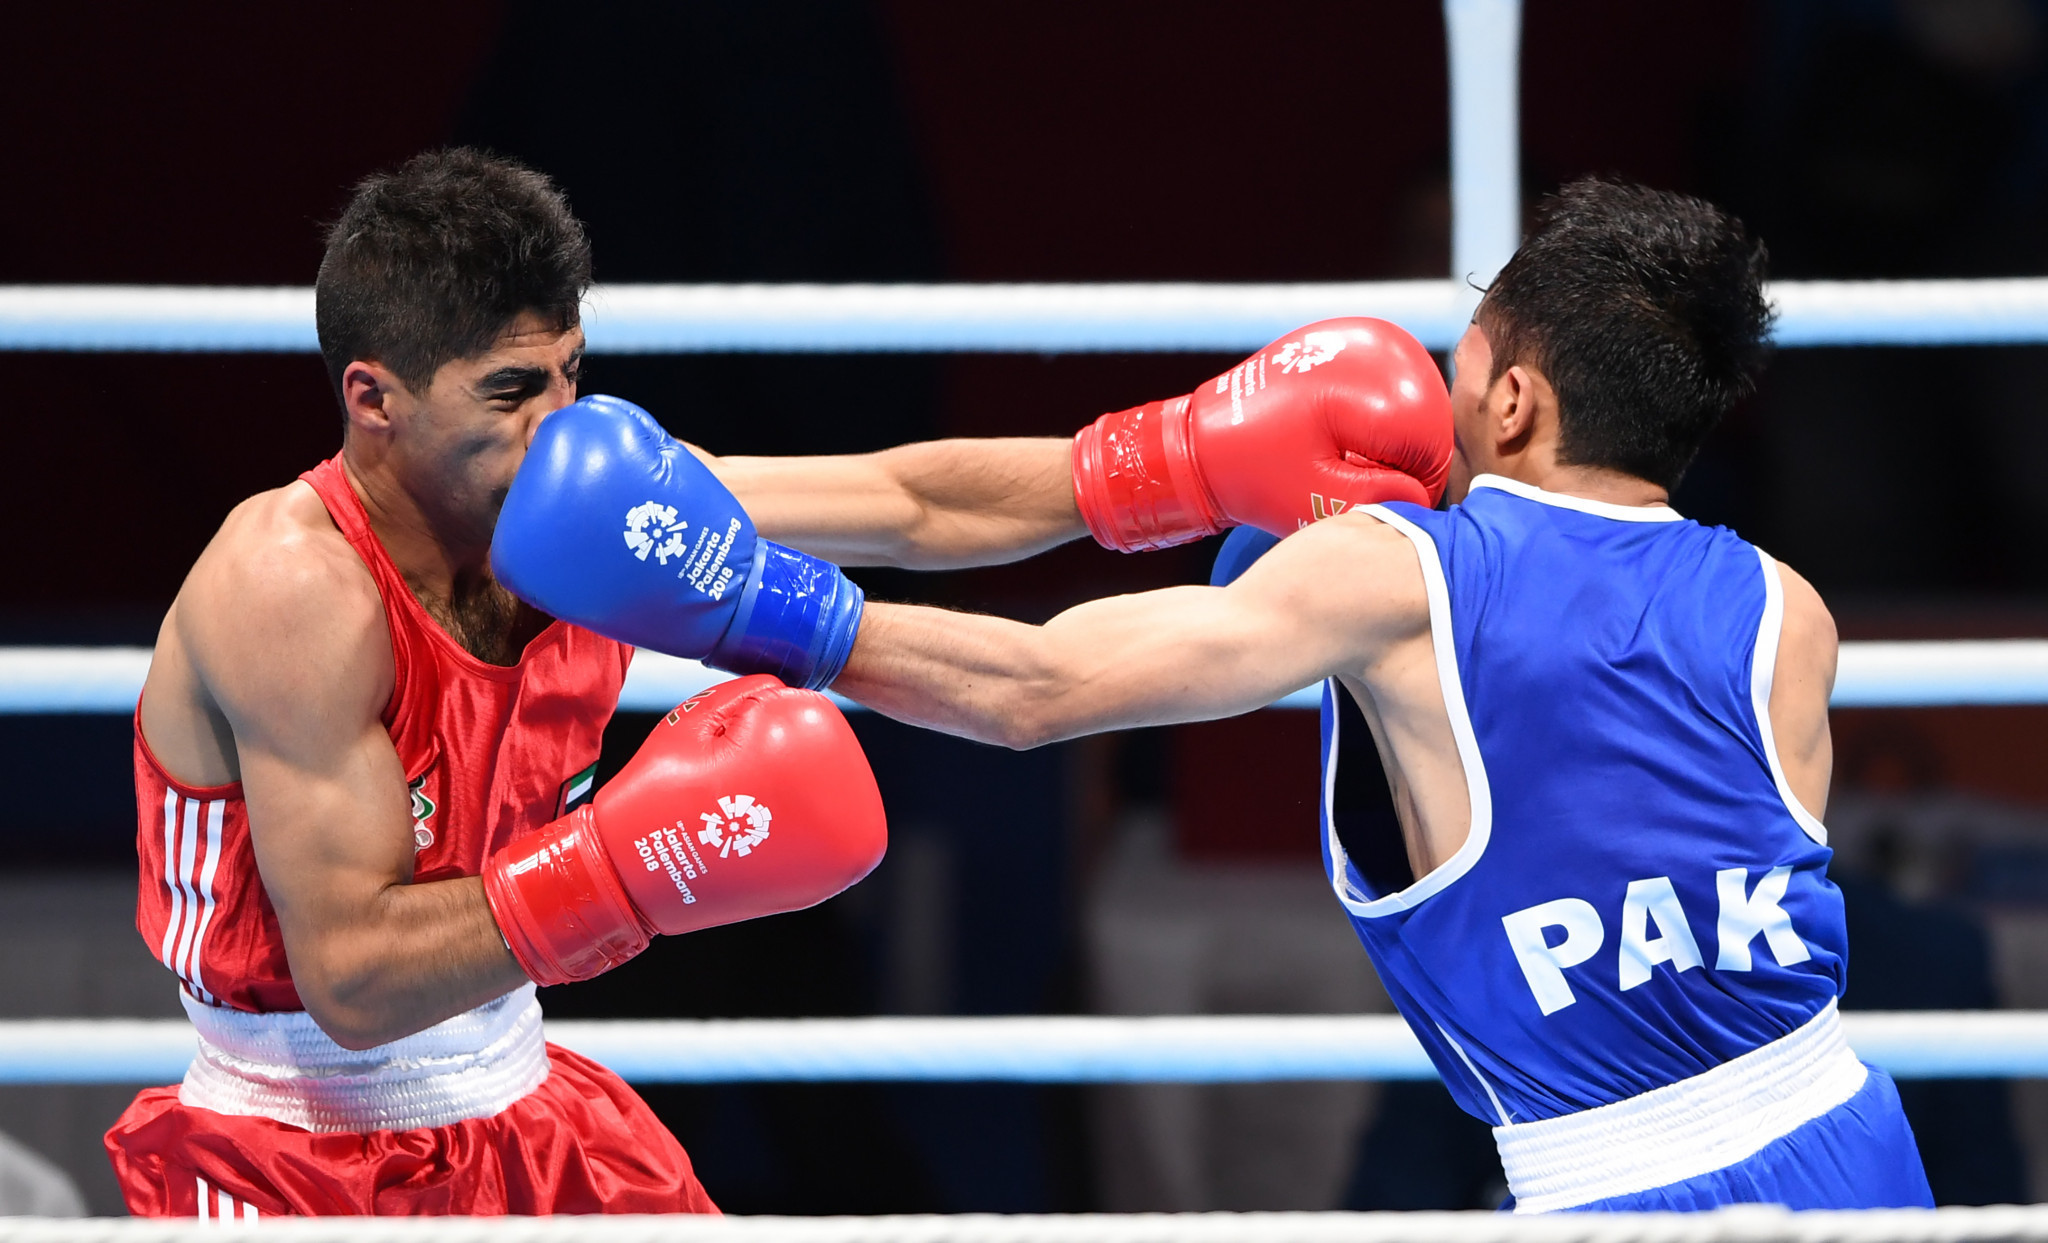 Pakistan Boxing Federation targets hiring Cuban coach as part of Asian Games preparations